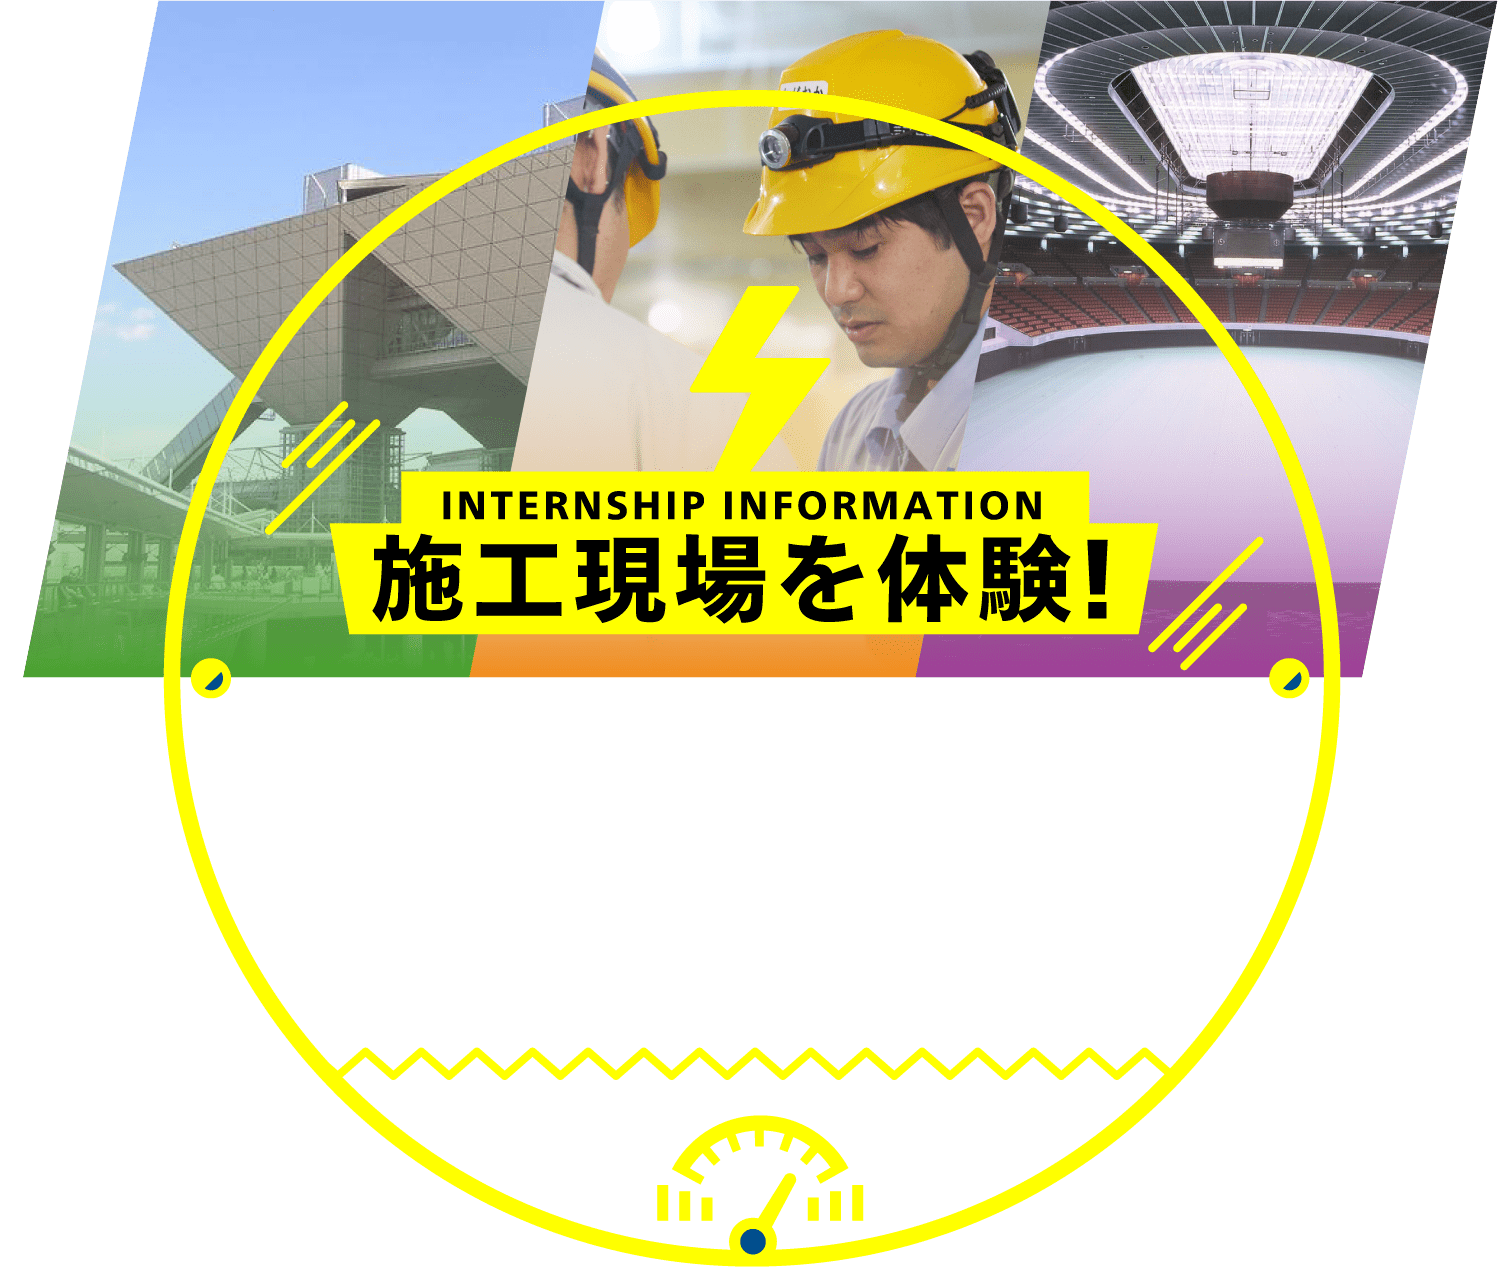 INTERNSHIP INFORMATION 施工現場を体験！